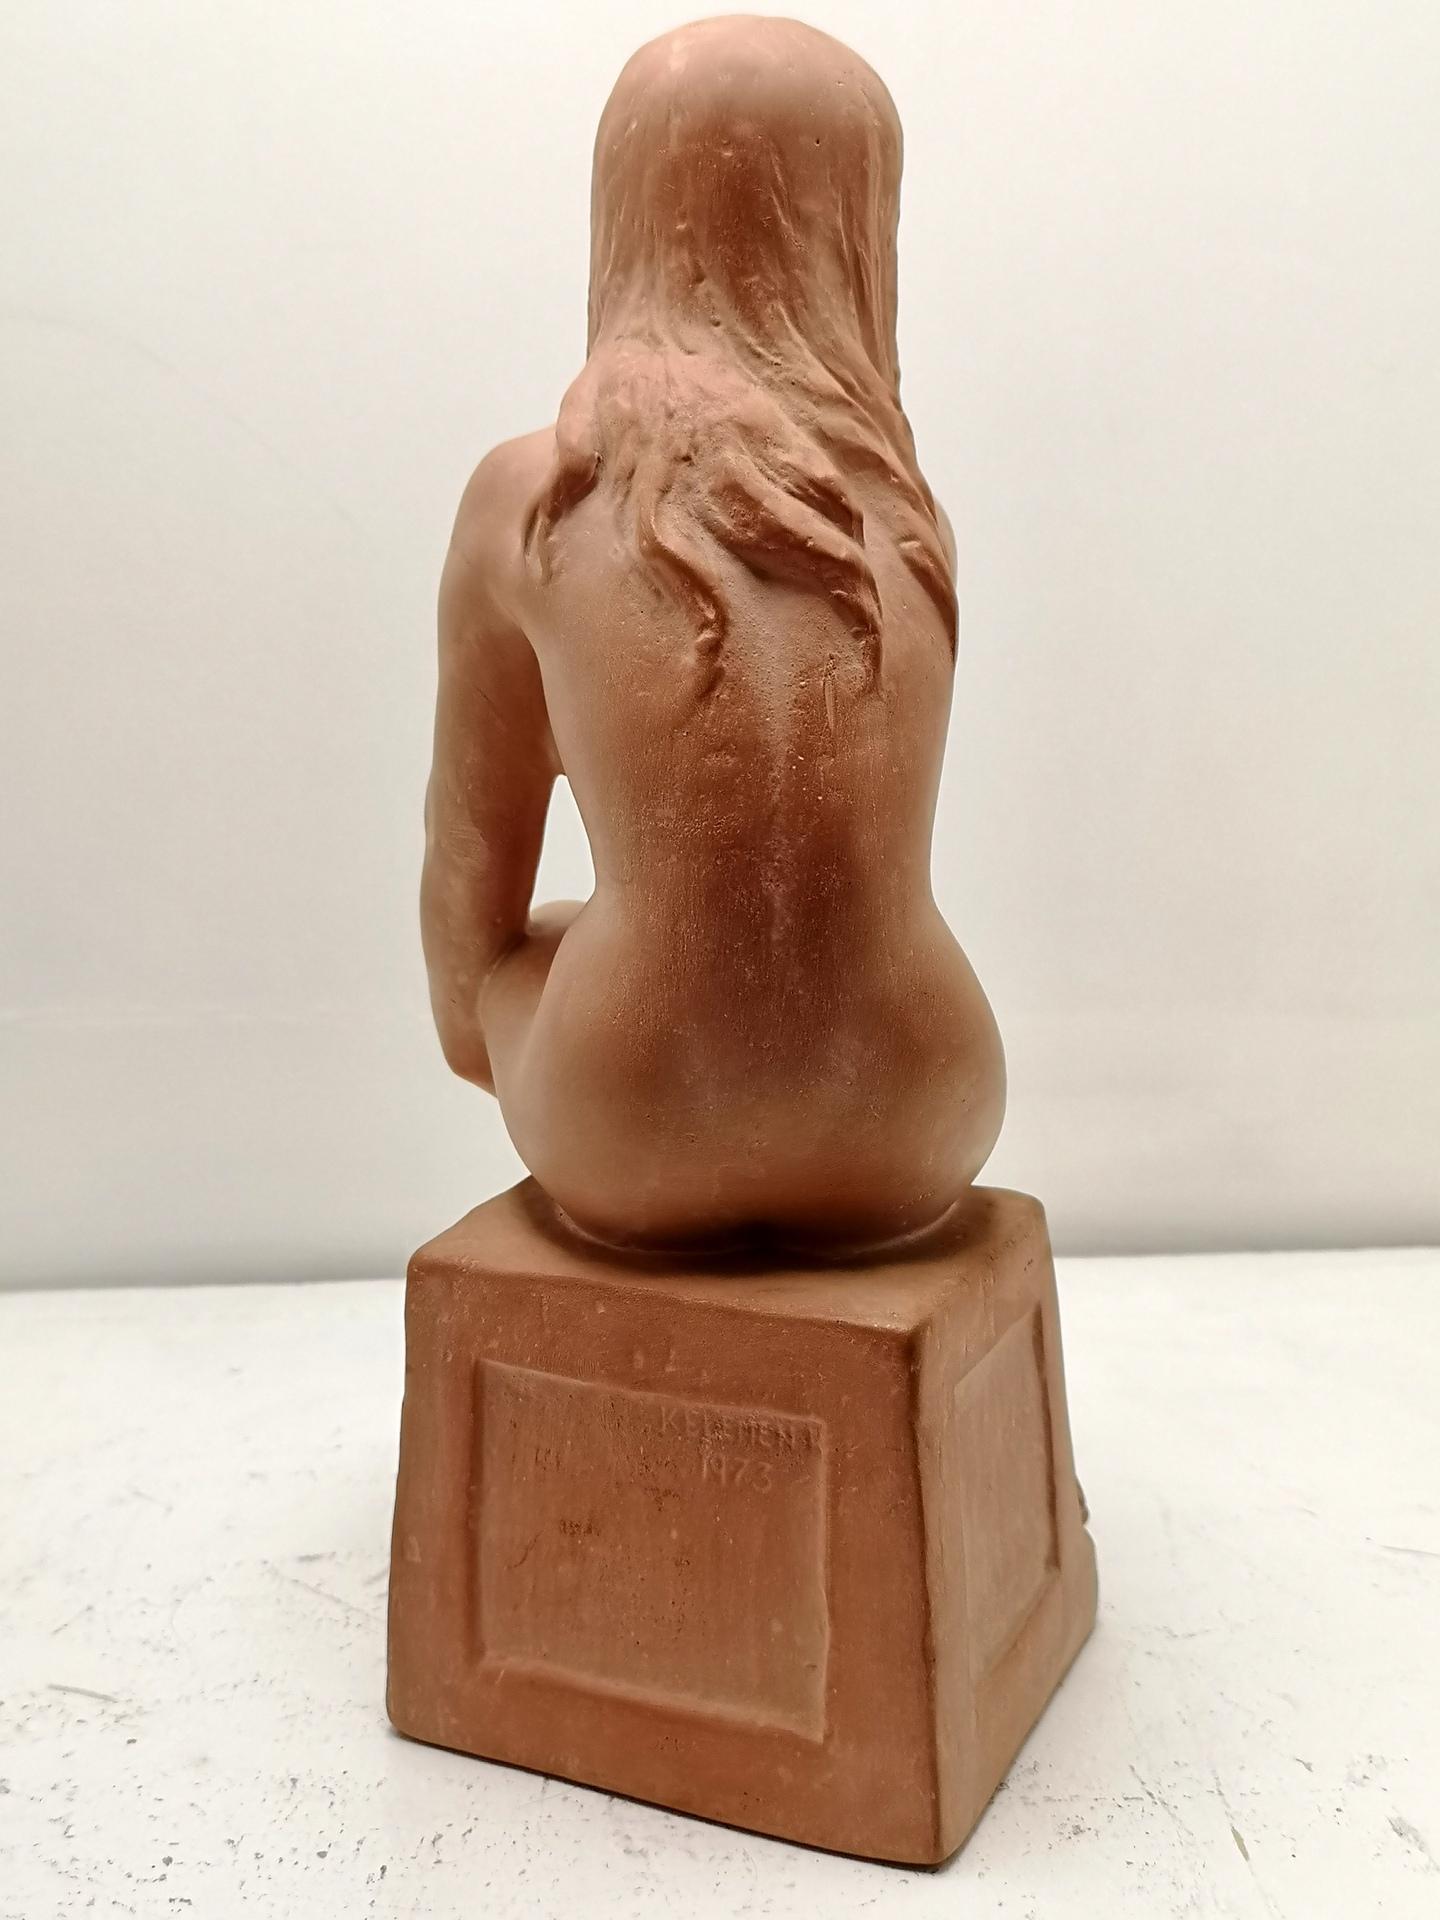 Art Deco Style Sitting Nude Terracotta Sculpture, by Sculptist Kelemen, 1973 For Sale 1